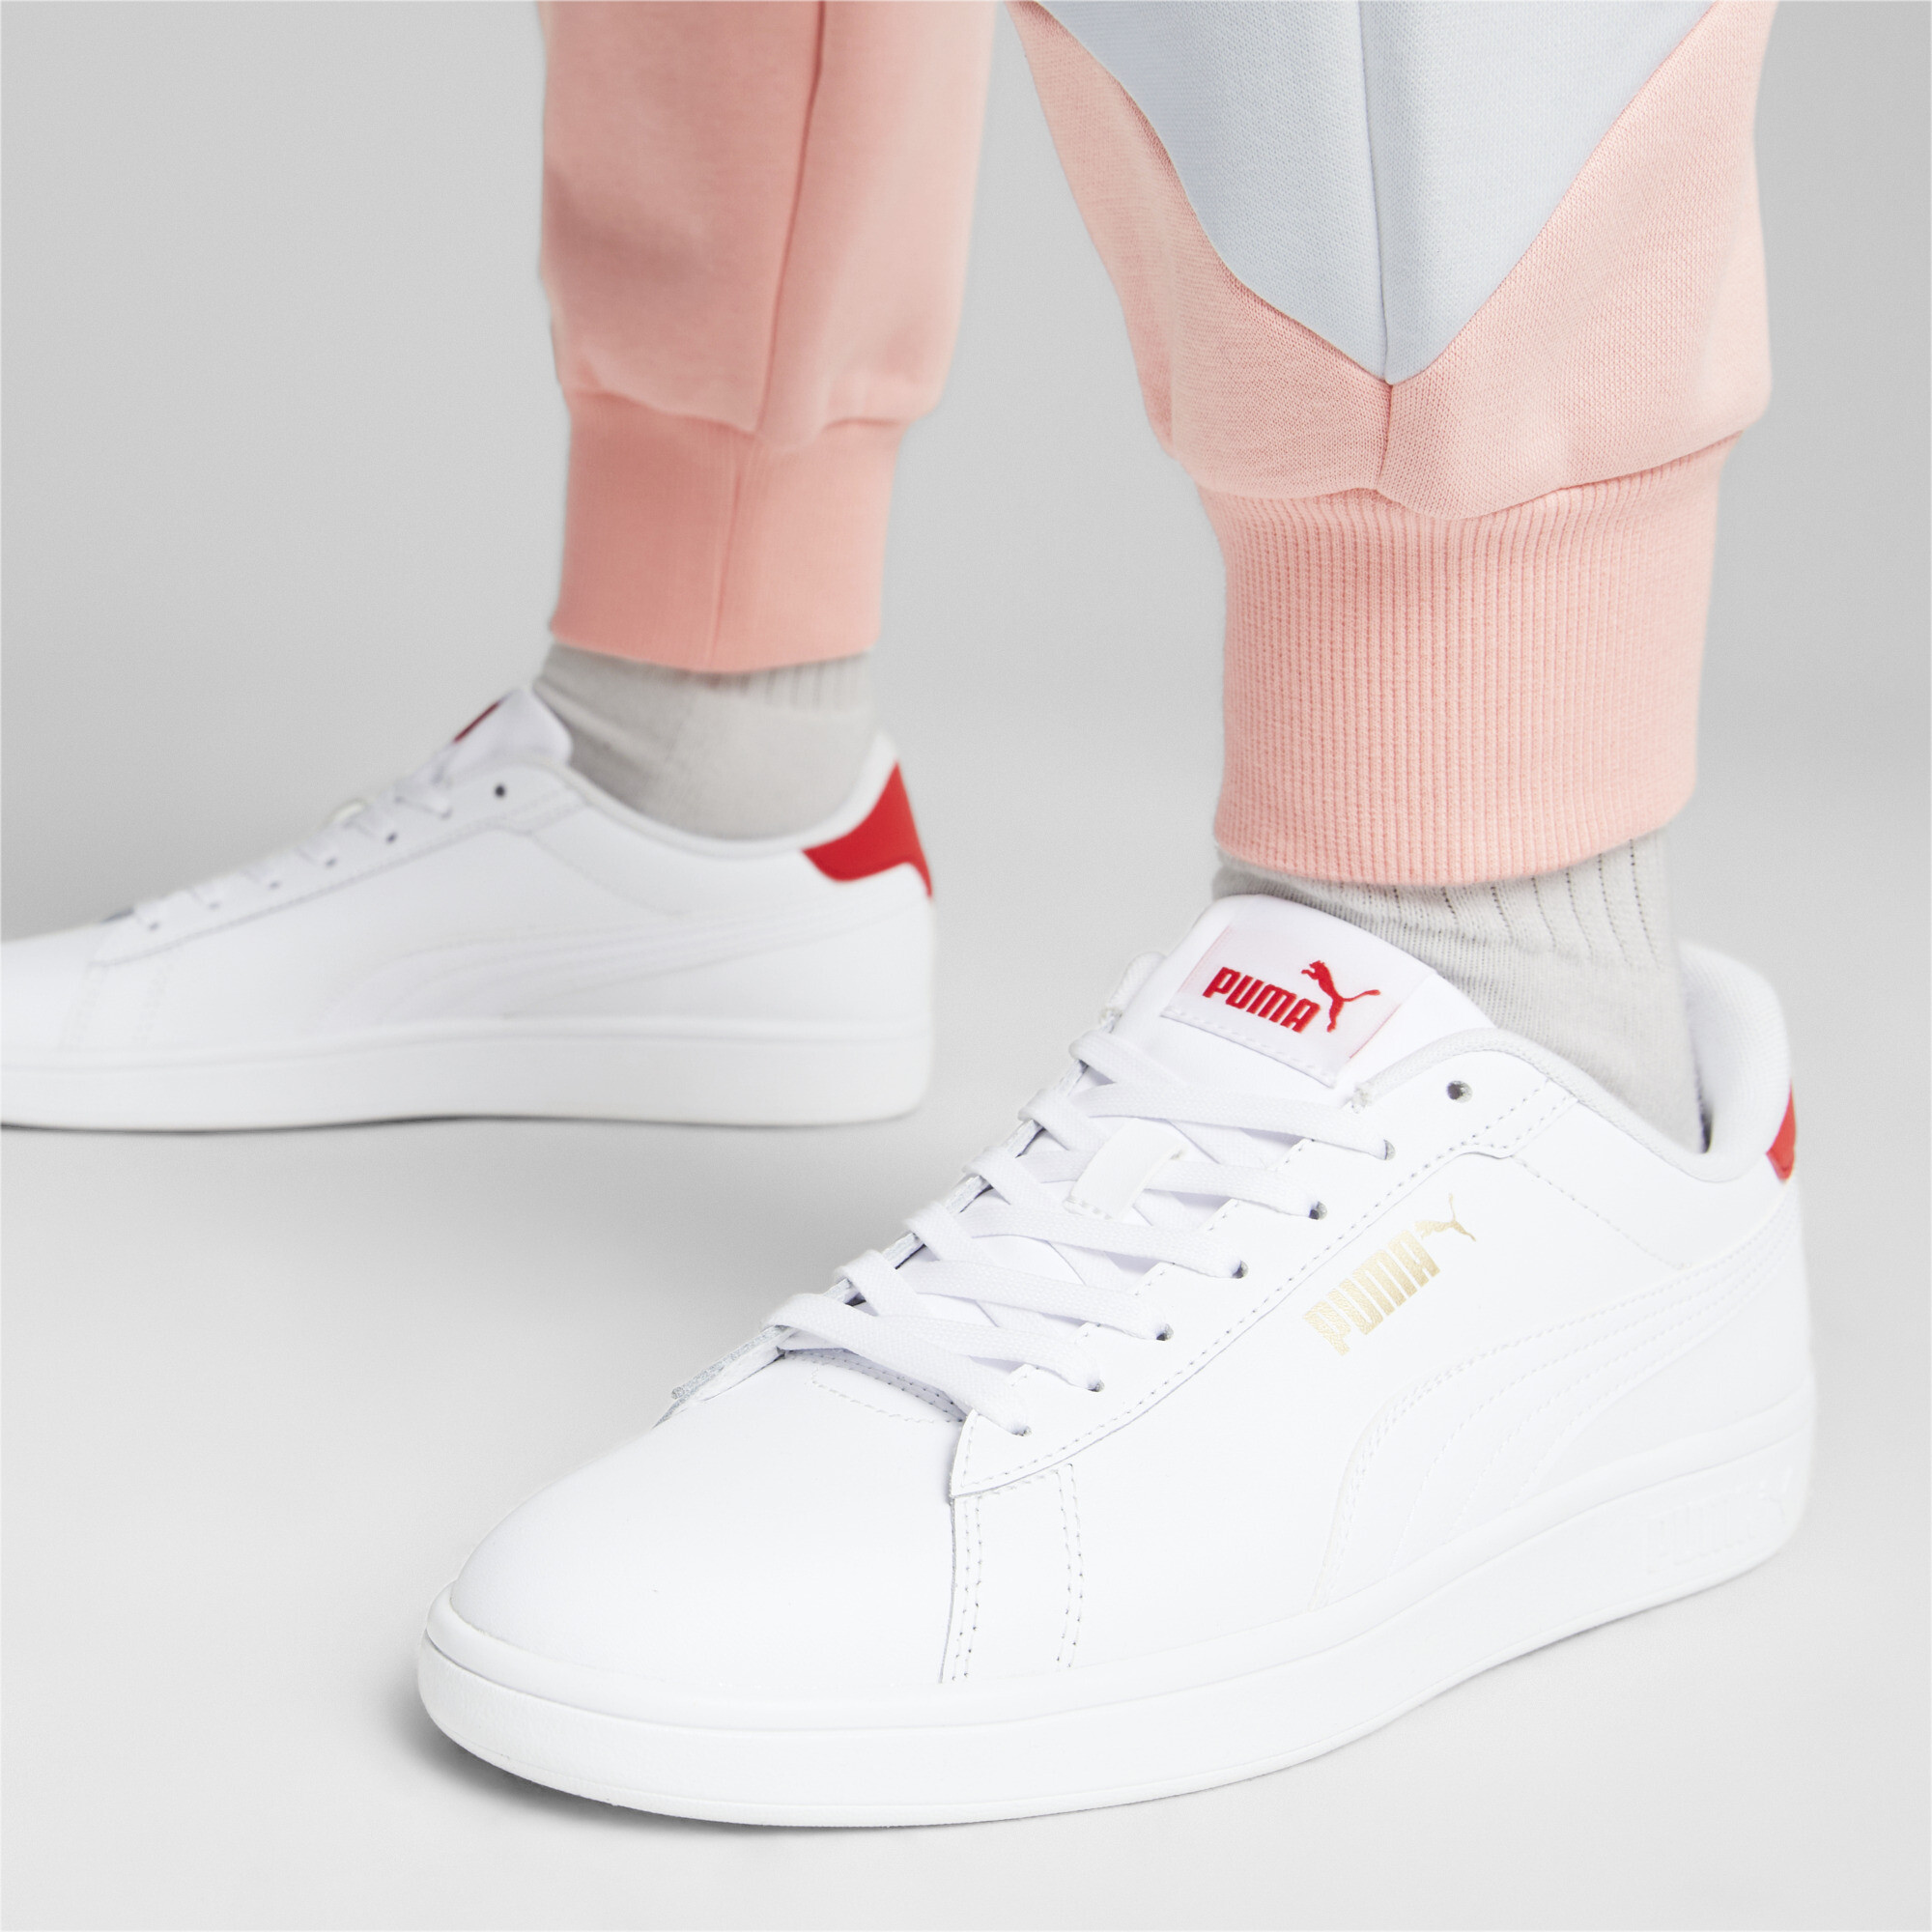 Puma Smash 3.0 L Sneakers, White, Size 37.5, Shoes